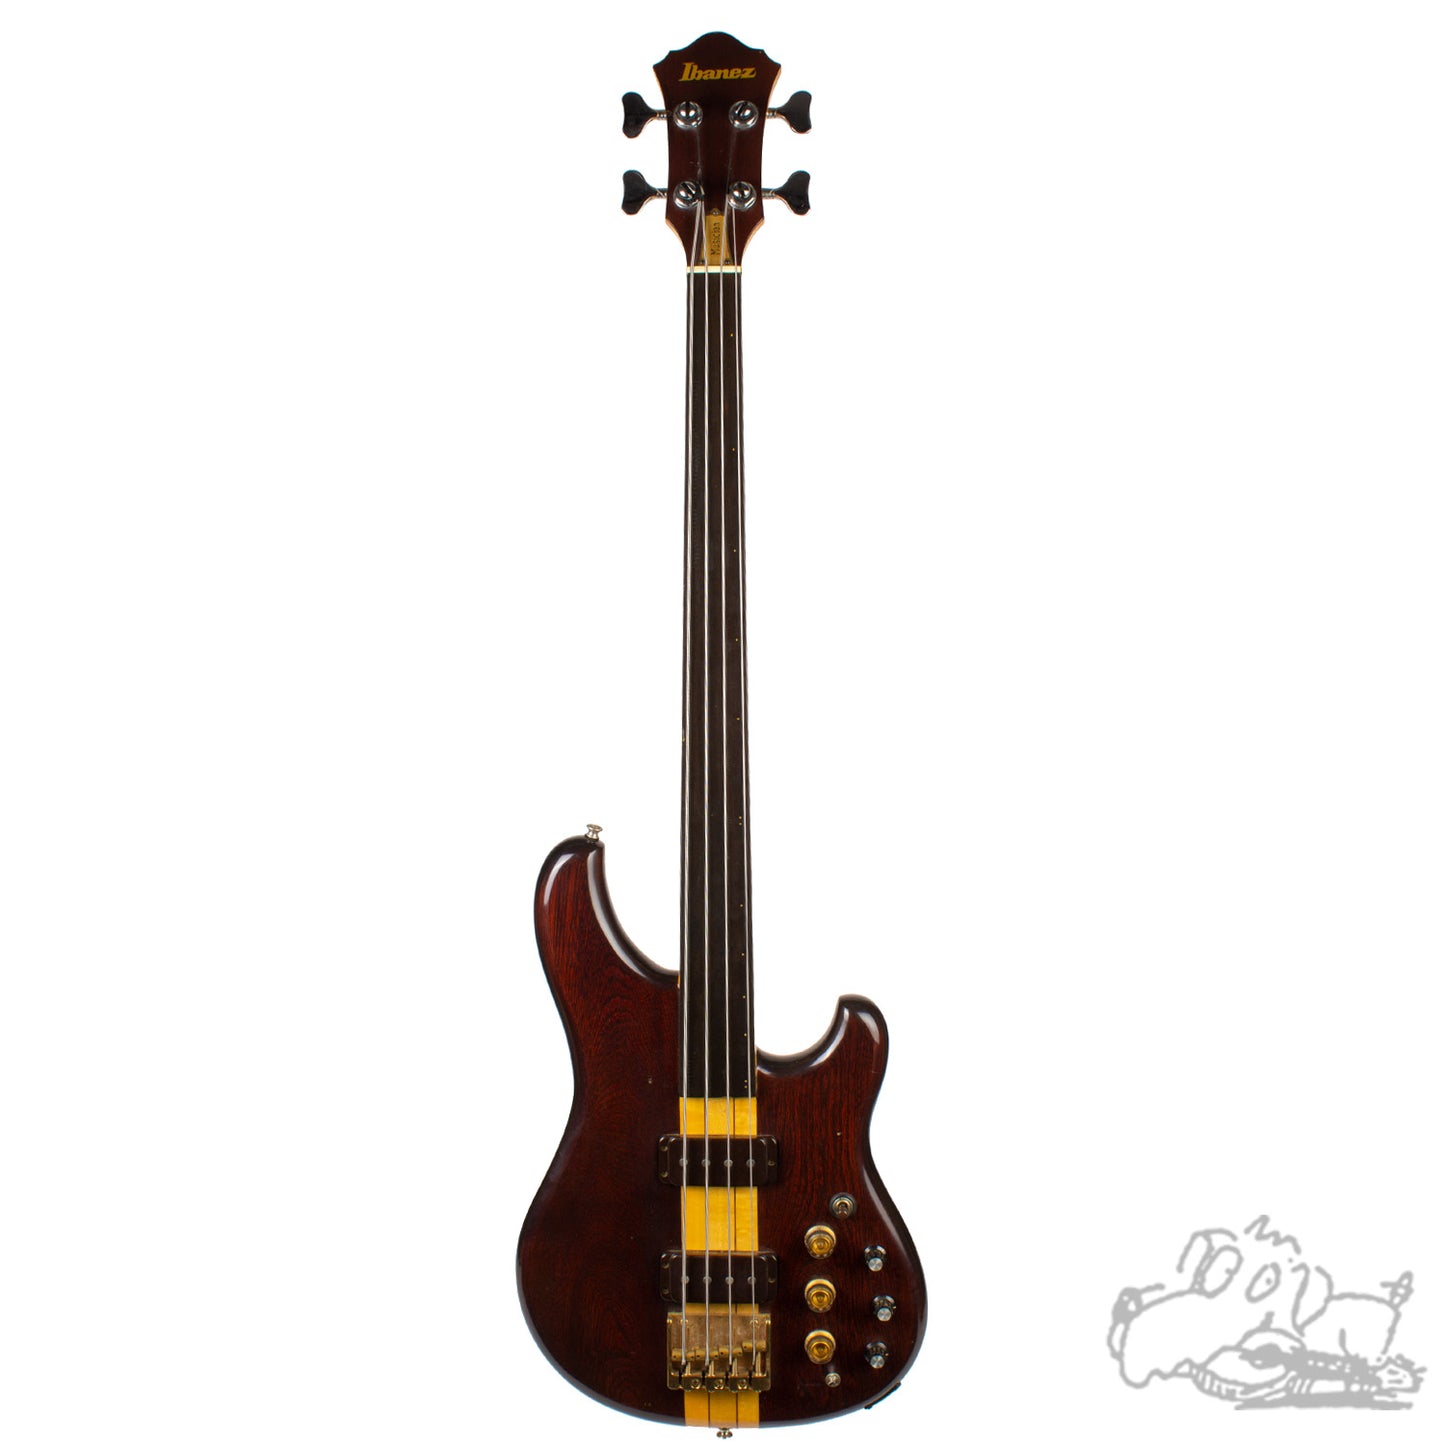 1981 Ibanez Musician Fretless Electric Bass